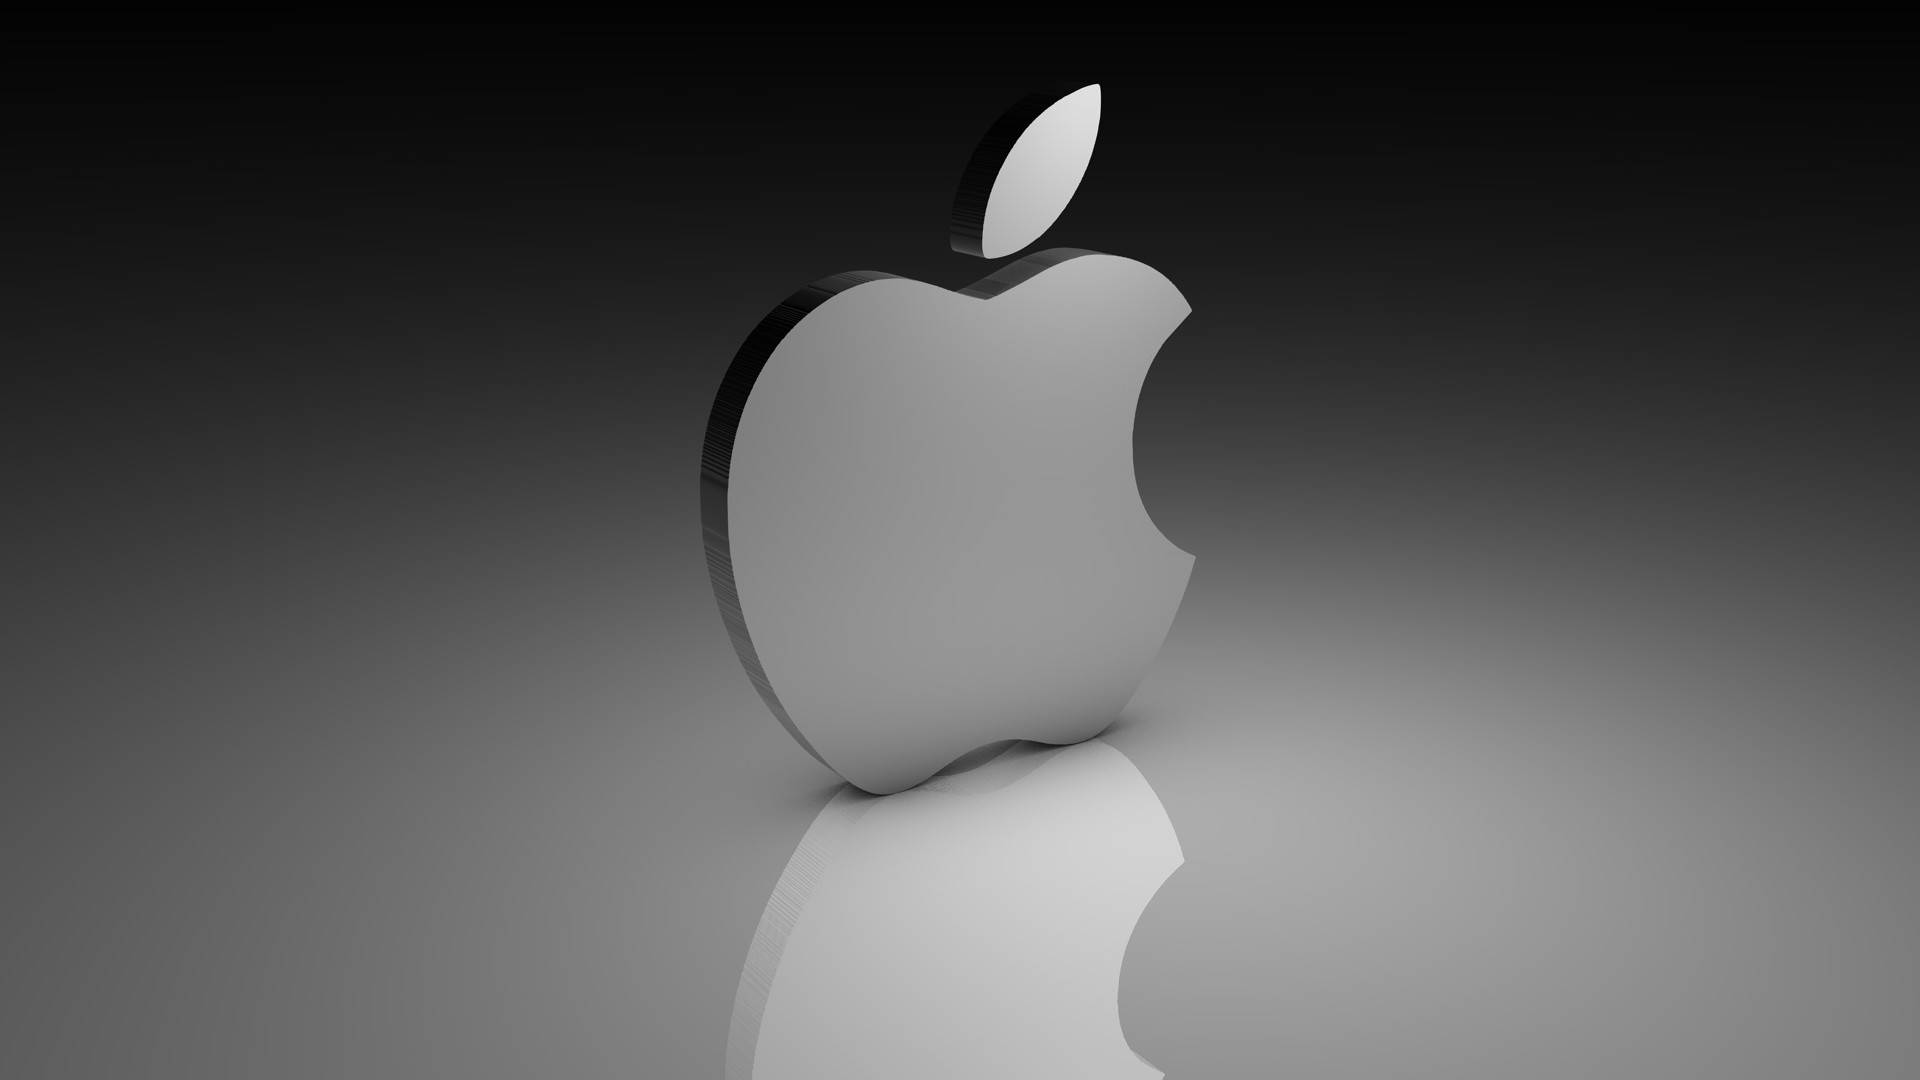 Gray Apple Logo Mac Os Background